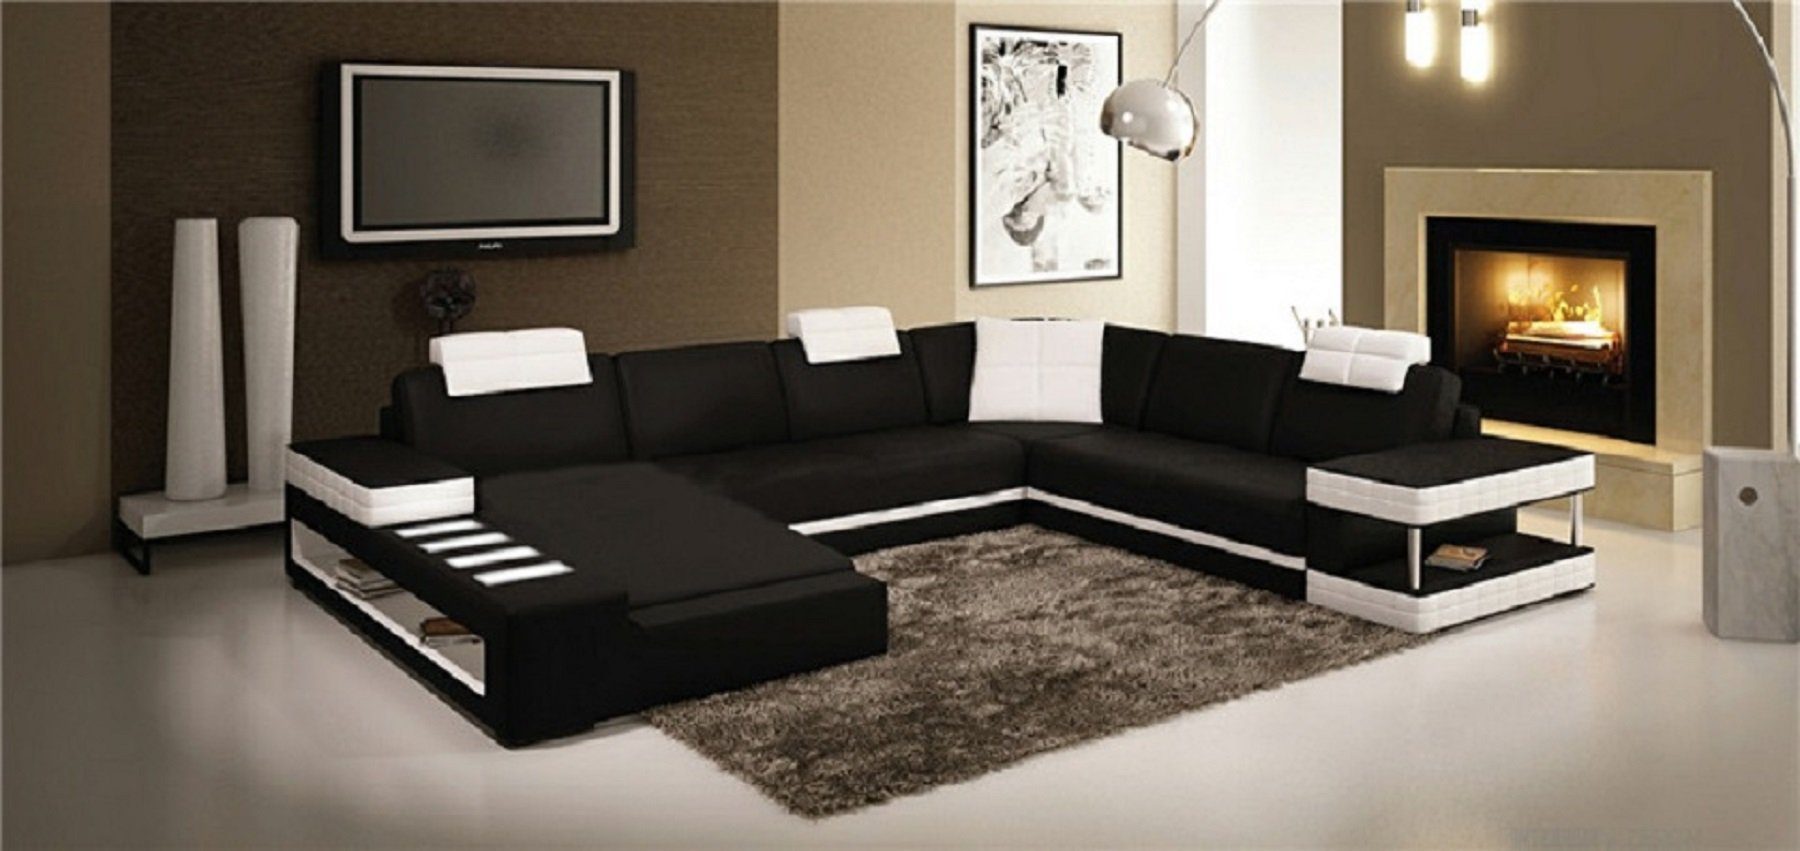 JVmoebel Ecksofa U Form Sofa Couch Polster Wohnlandschaft Design Luxus Ecksofa Leder Schwarz/Weiß